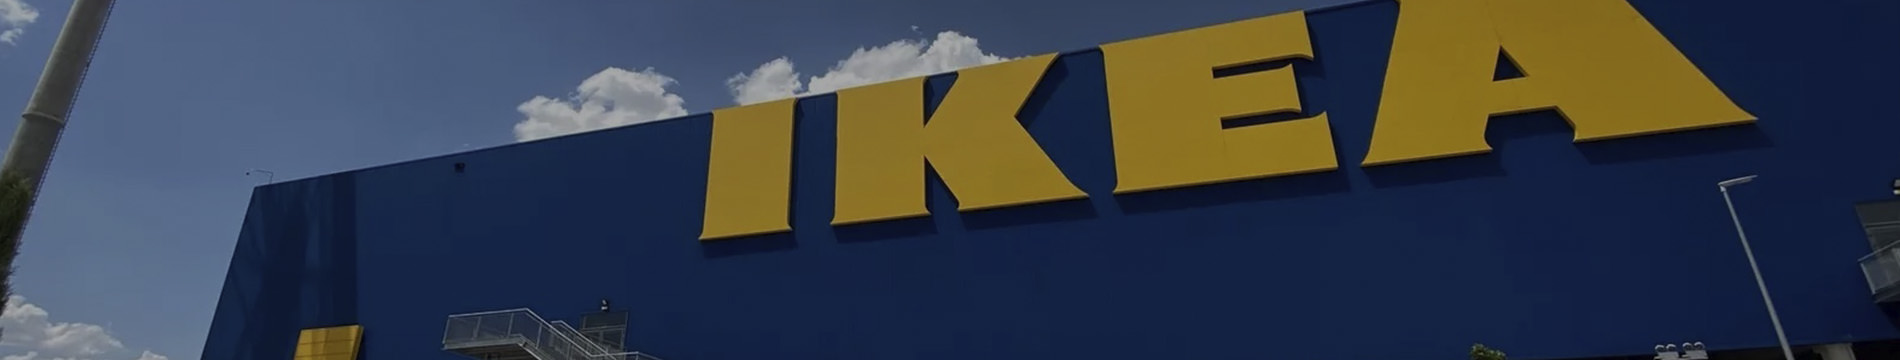 El Cashback de IKEA por fin en España